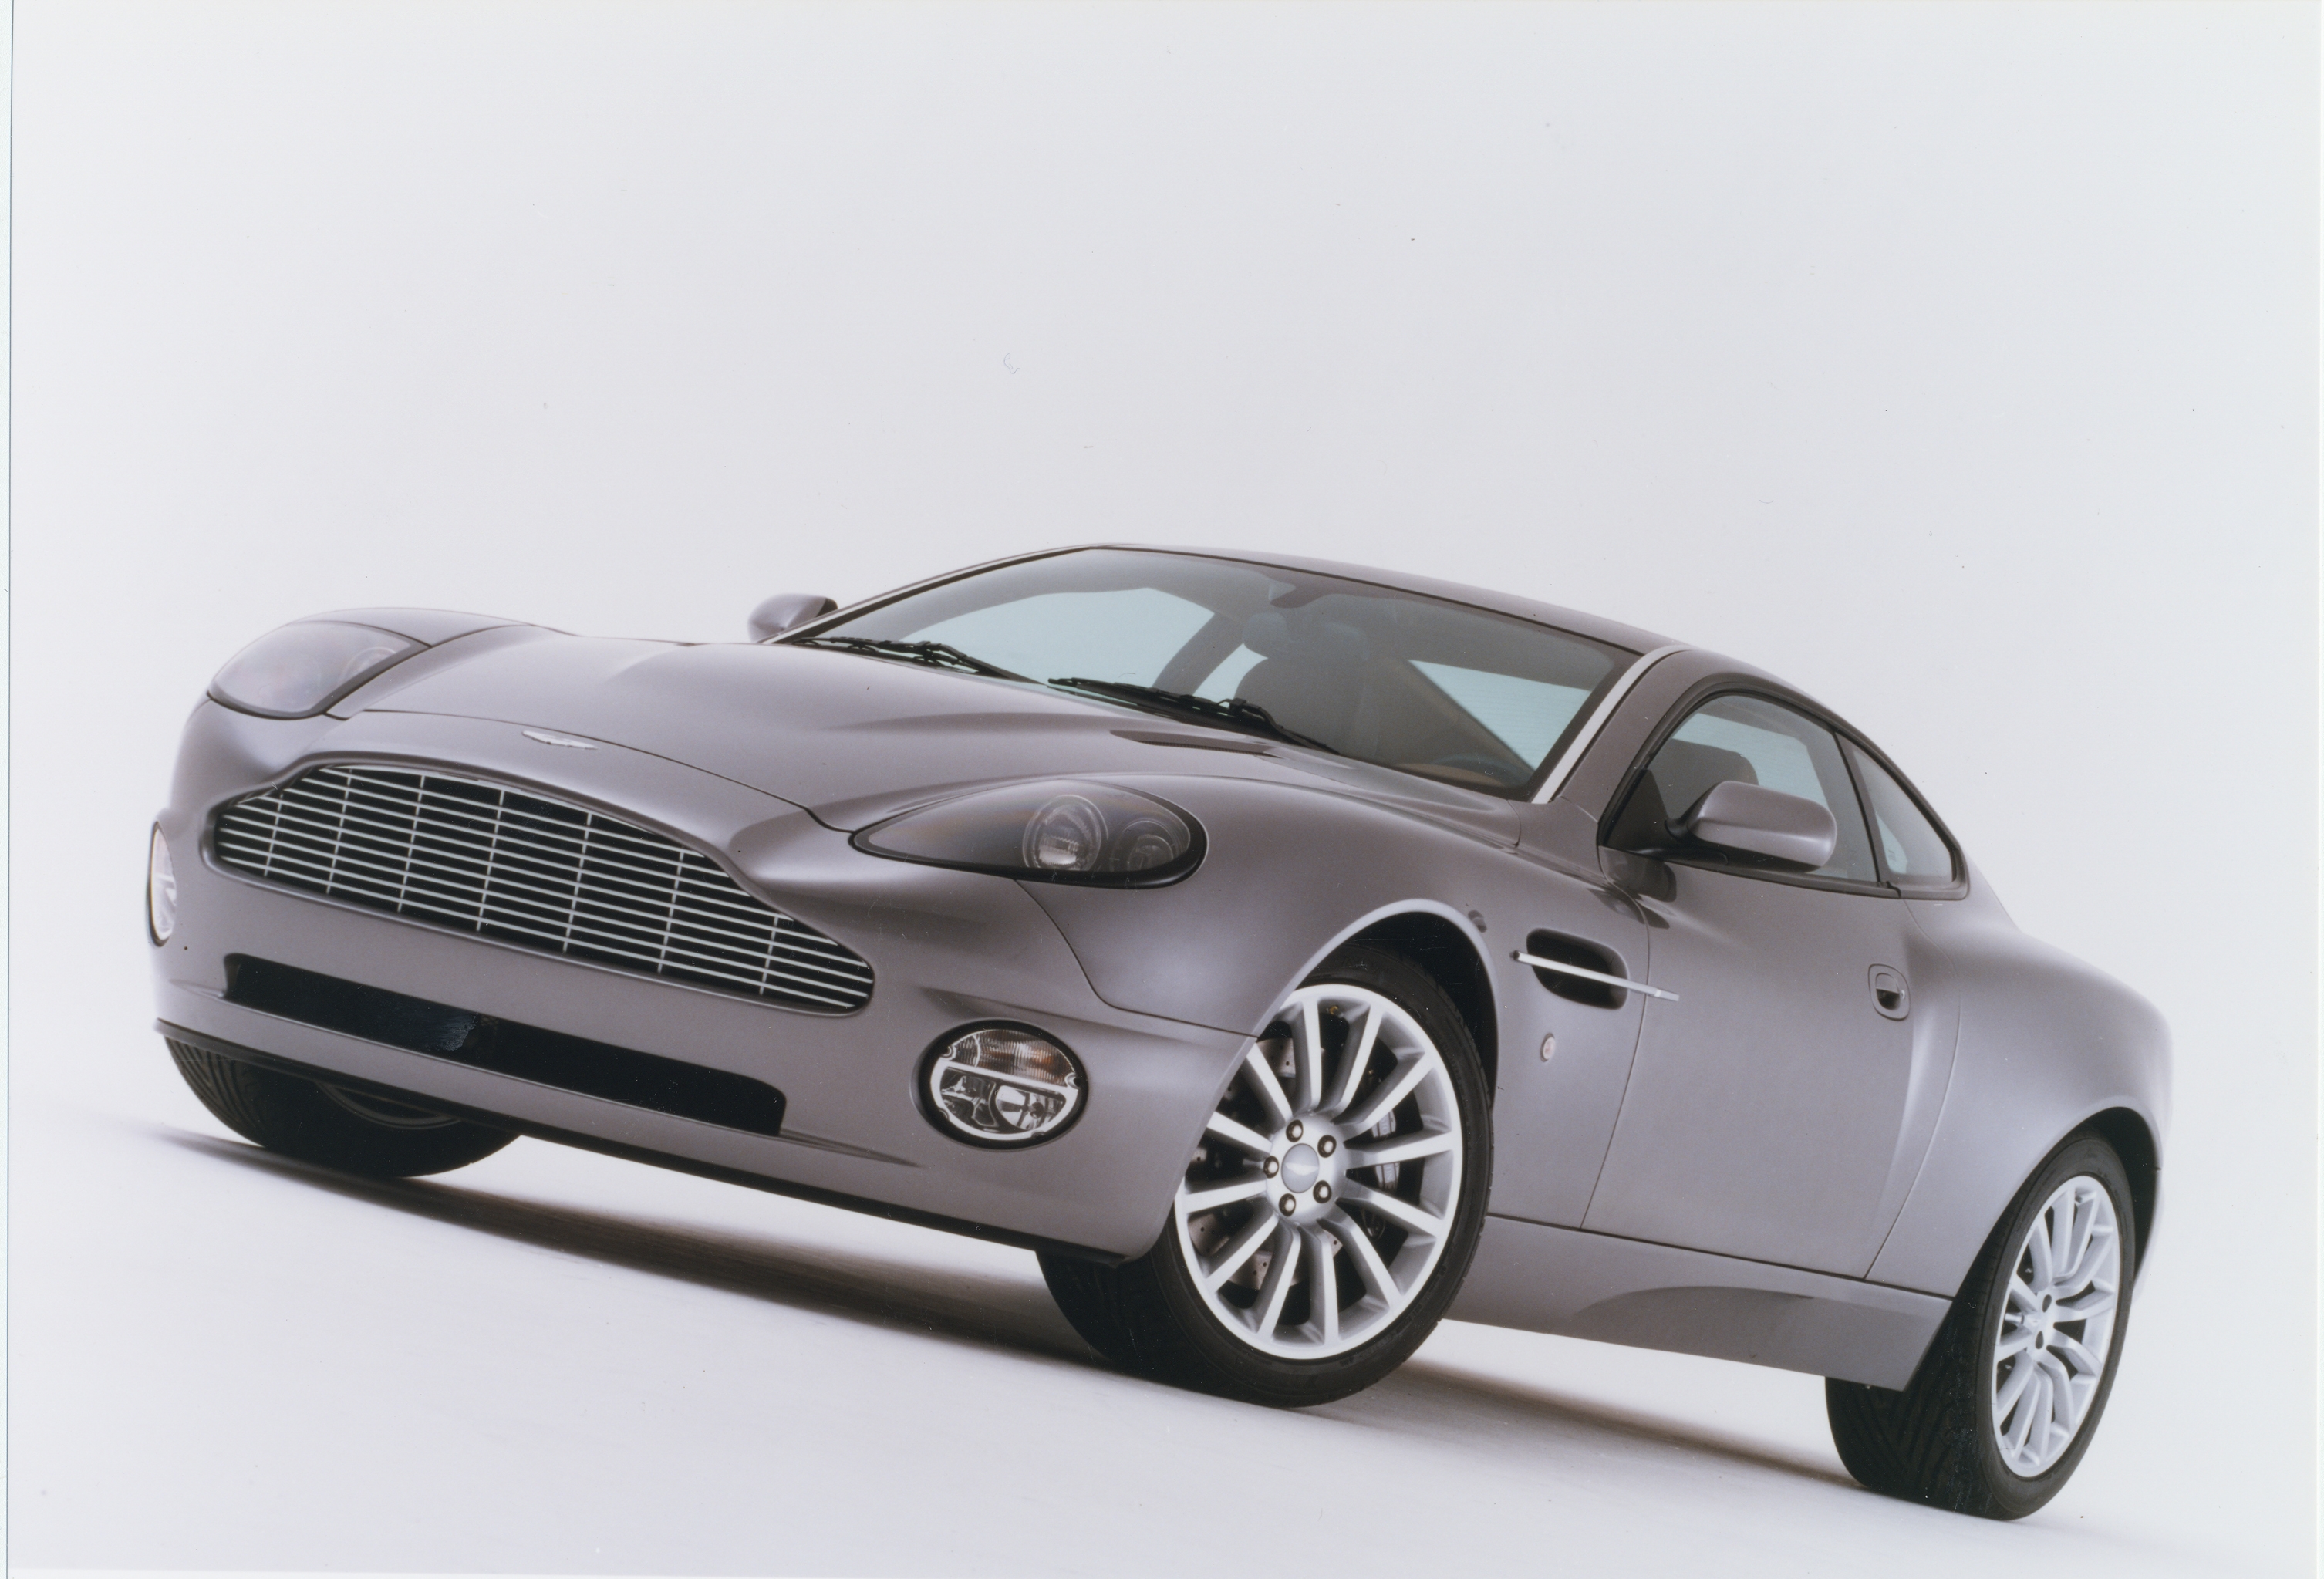 cars, Aston Martin, vehicles, Aston Martin V12 Vanquish, front angle view - desktop wallpaper